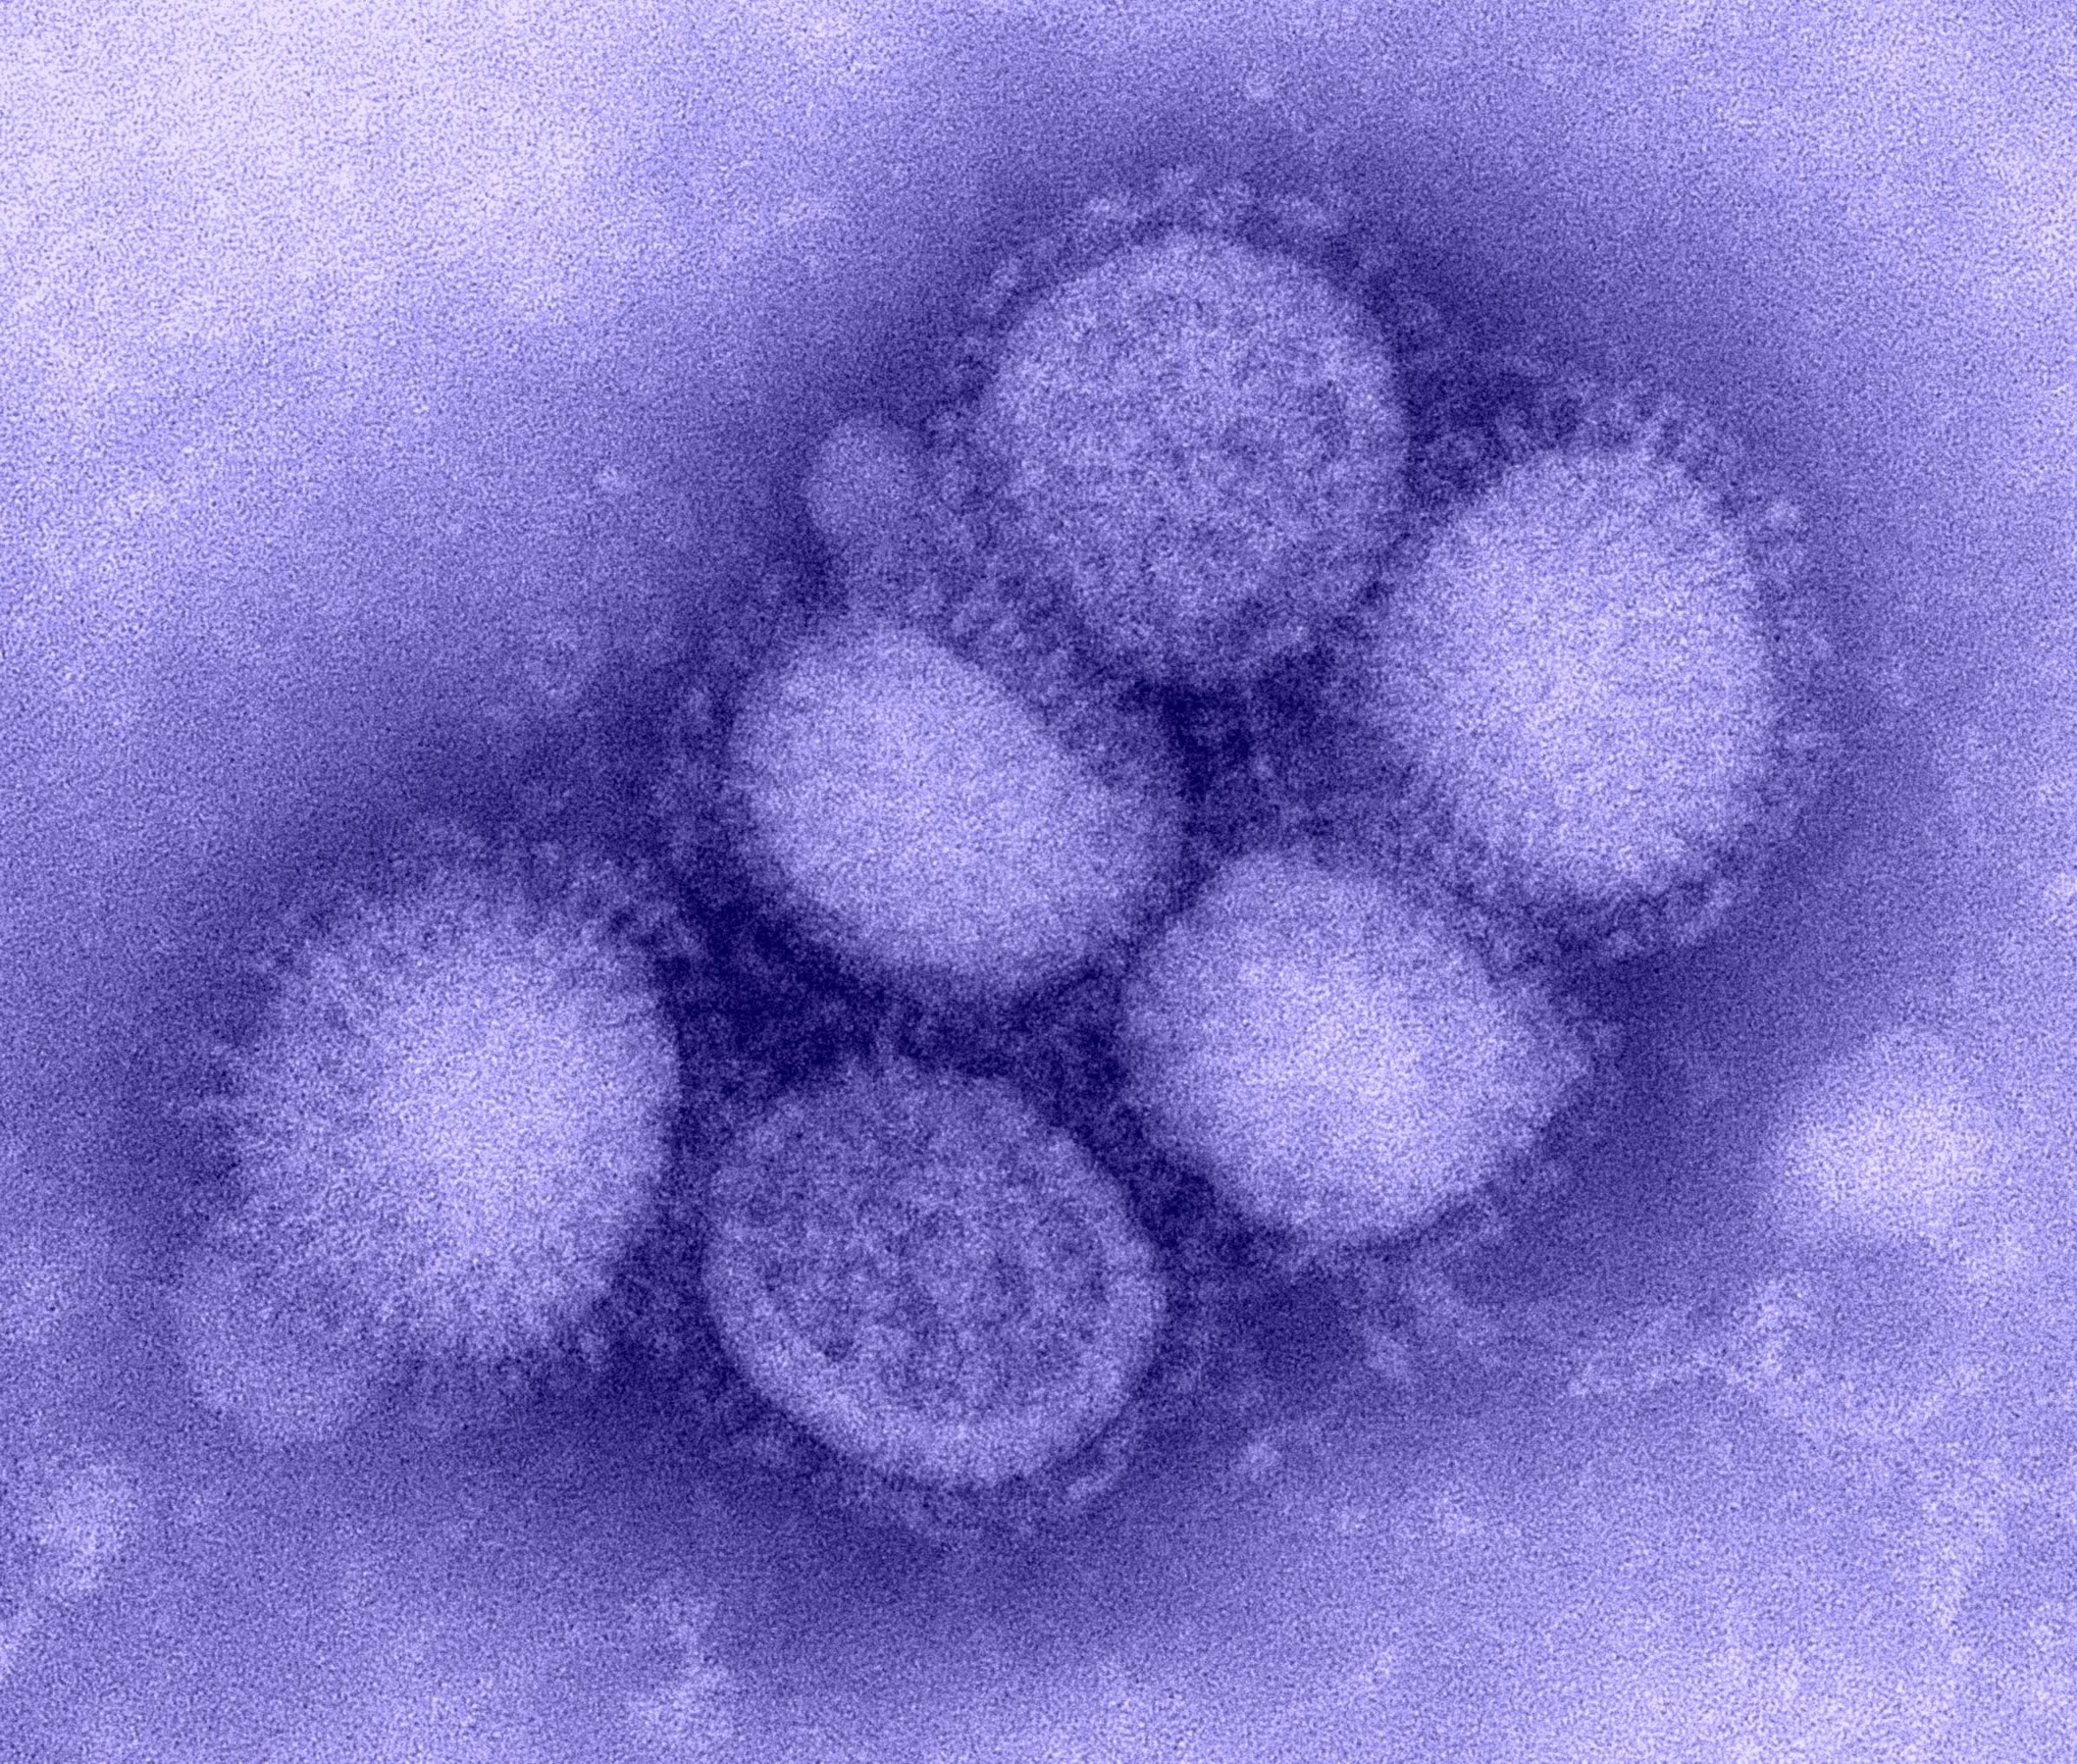 Спин грипп. Вирус свиного гриппа (h1n1). H2n2 вирус. Вирус гриппа под микроскопом h1n1. Возбудитель гриппа Orthomyxoviridae.